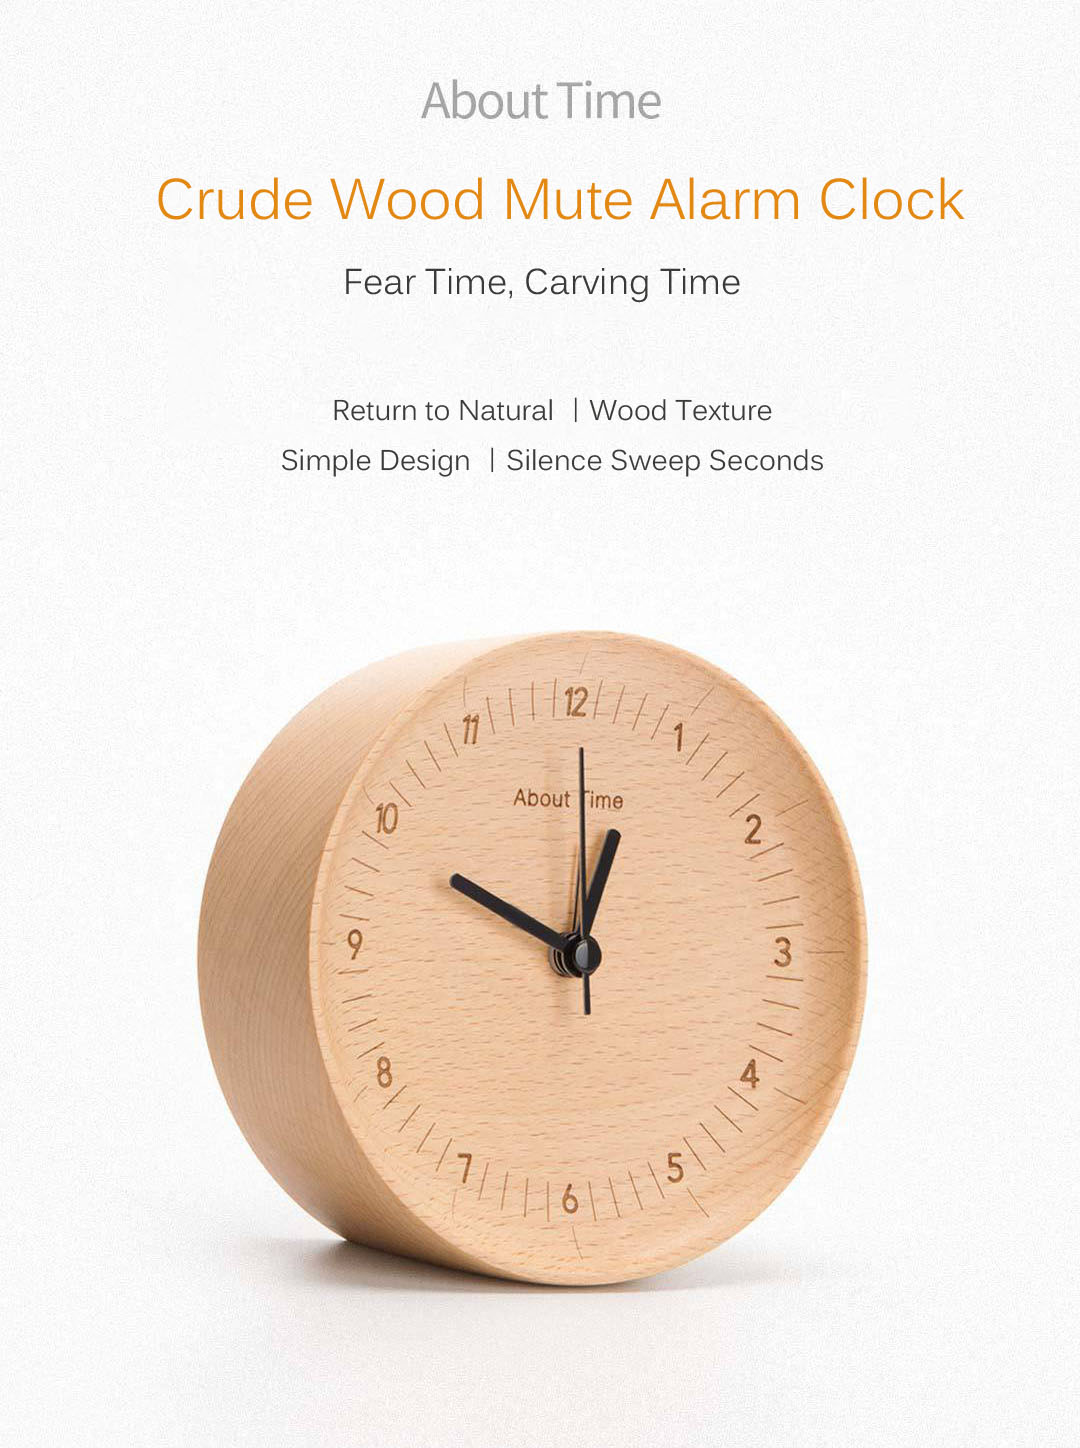 xiaomi beladesign about time german beech wood bedside alarm clock